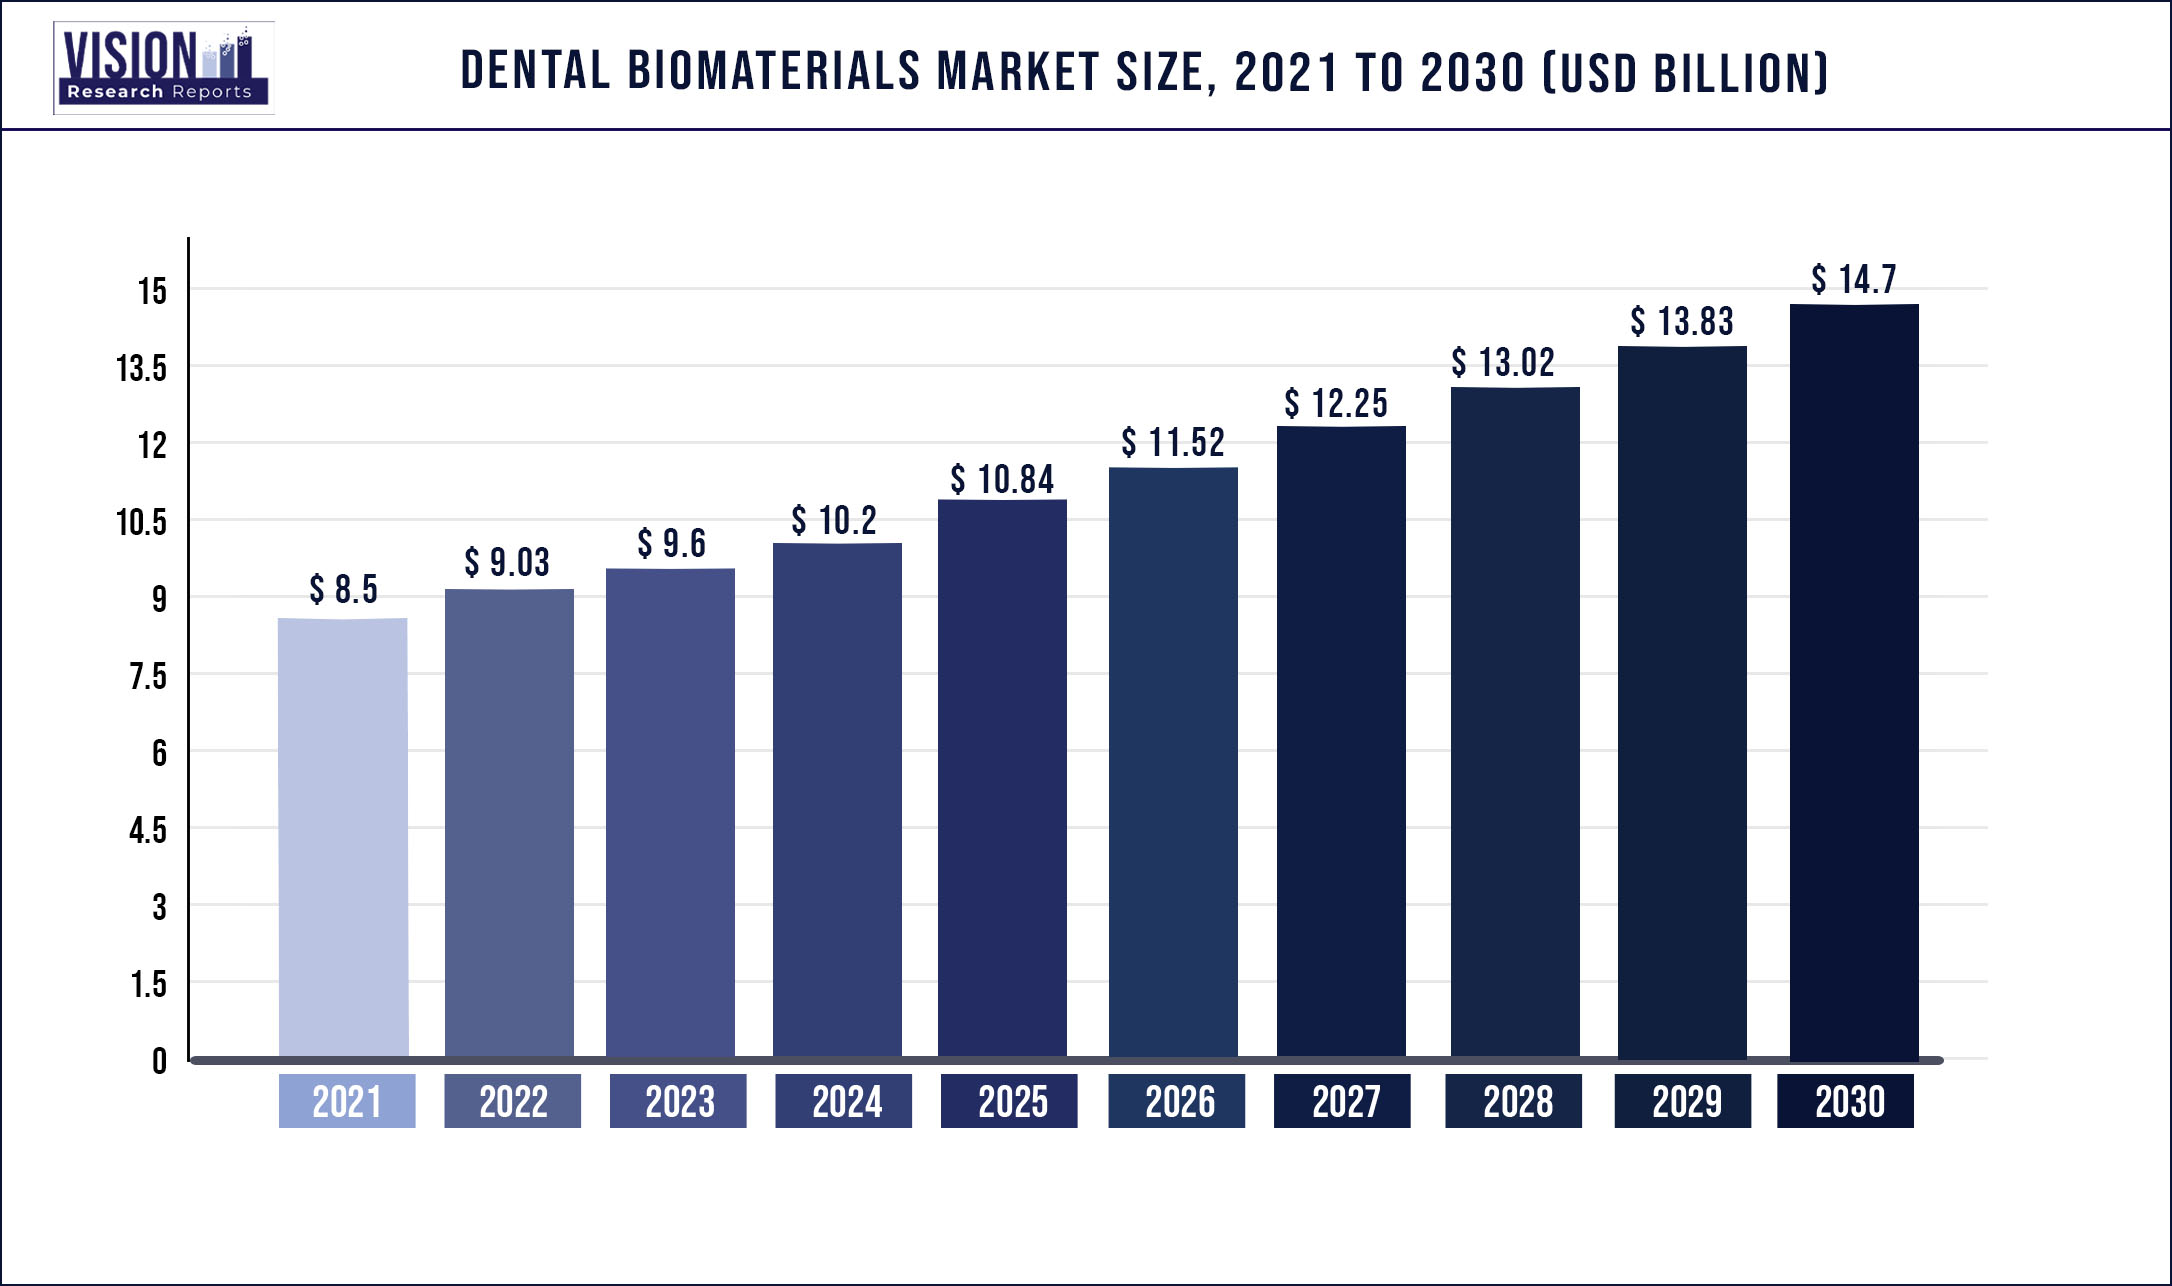 Dental Biomaterials Market Size 2021 to 2030